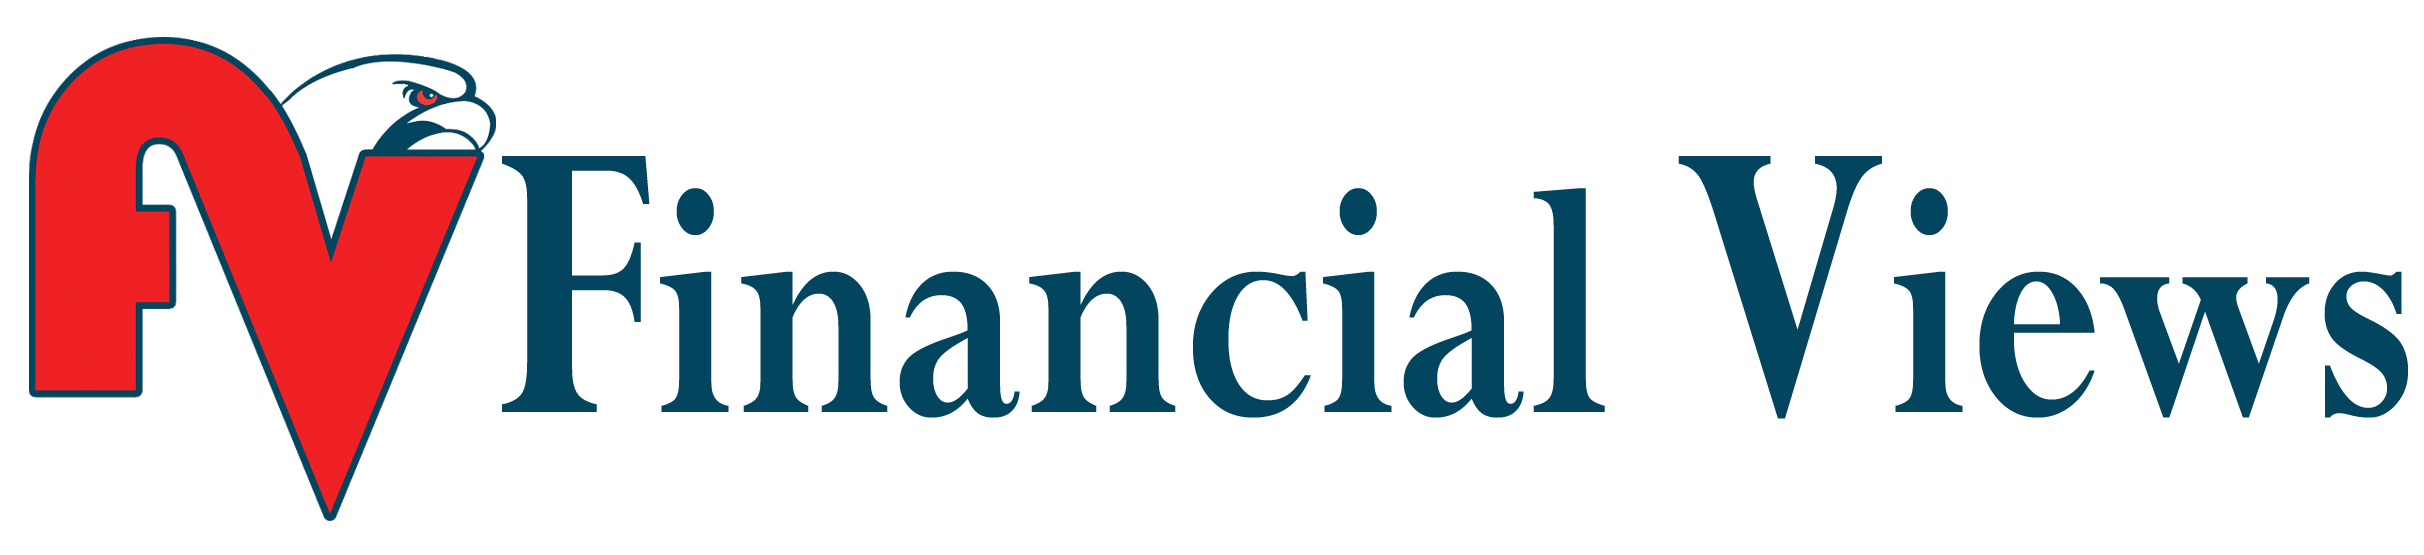 Financial views logo